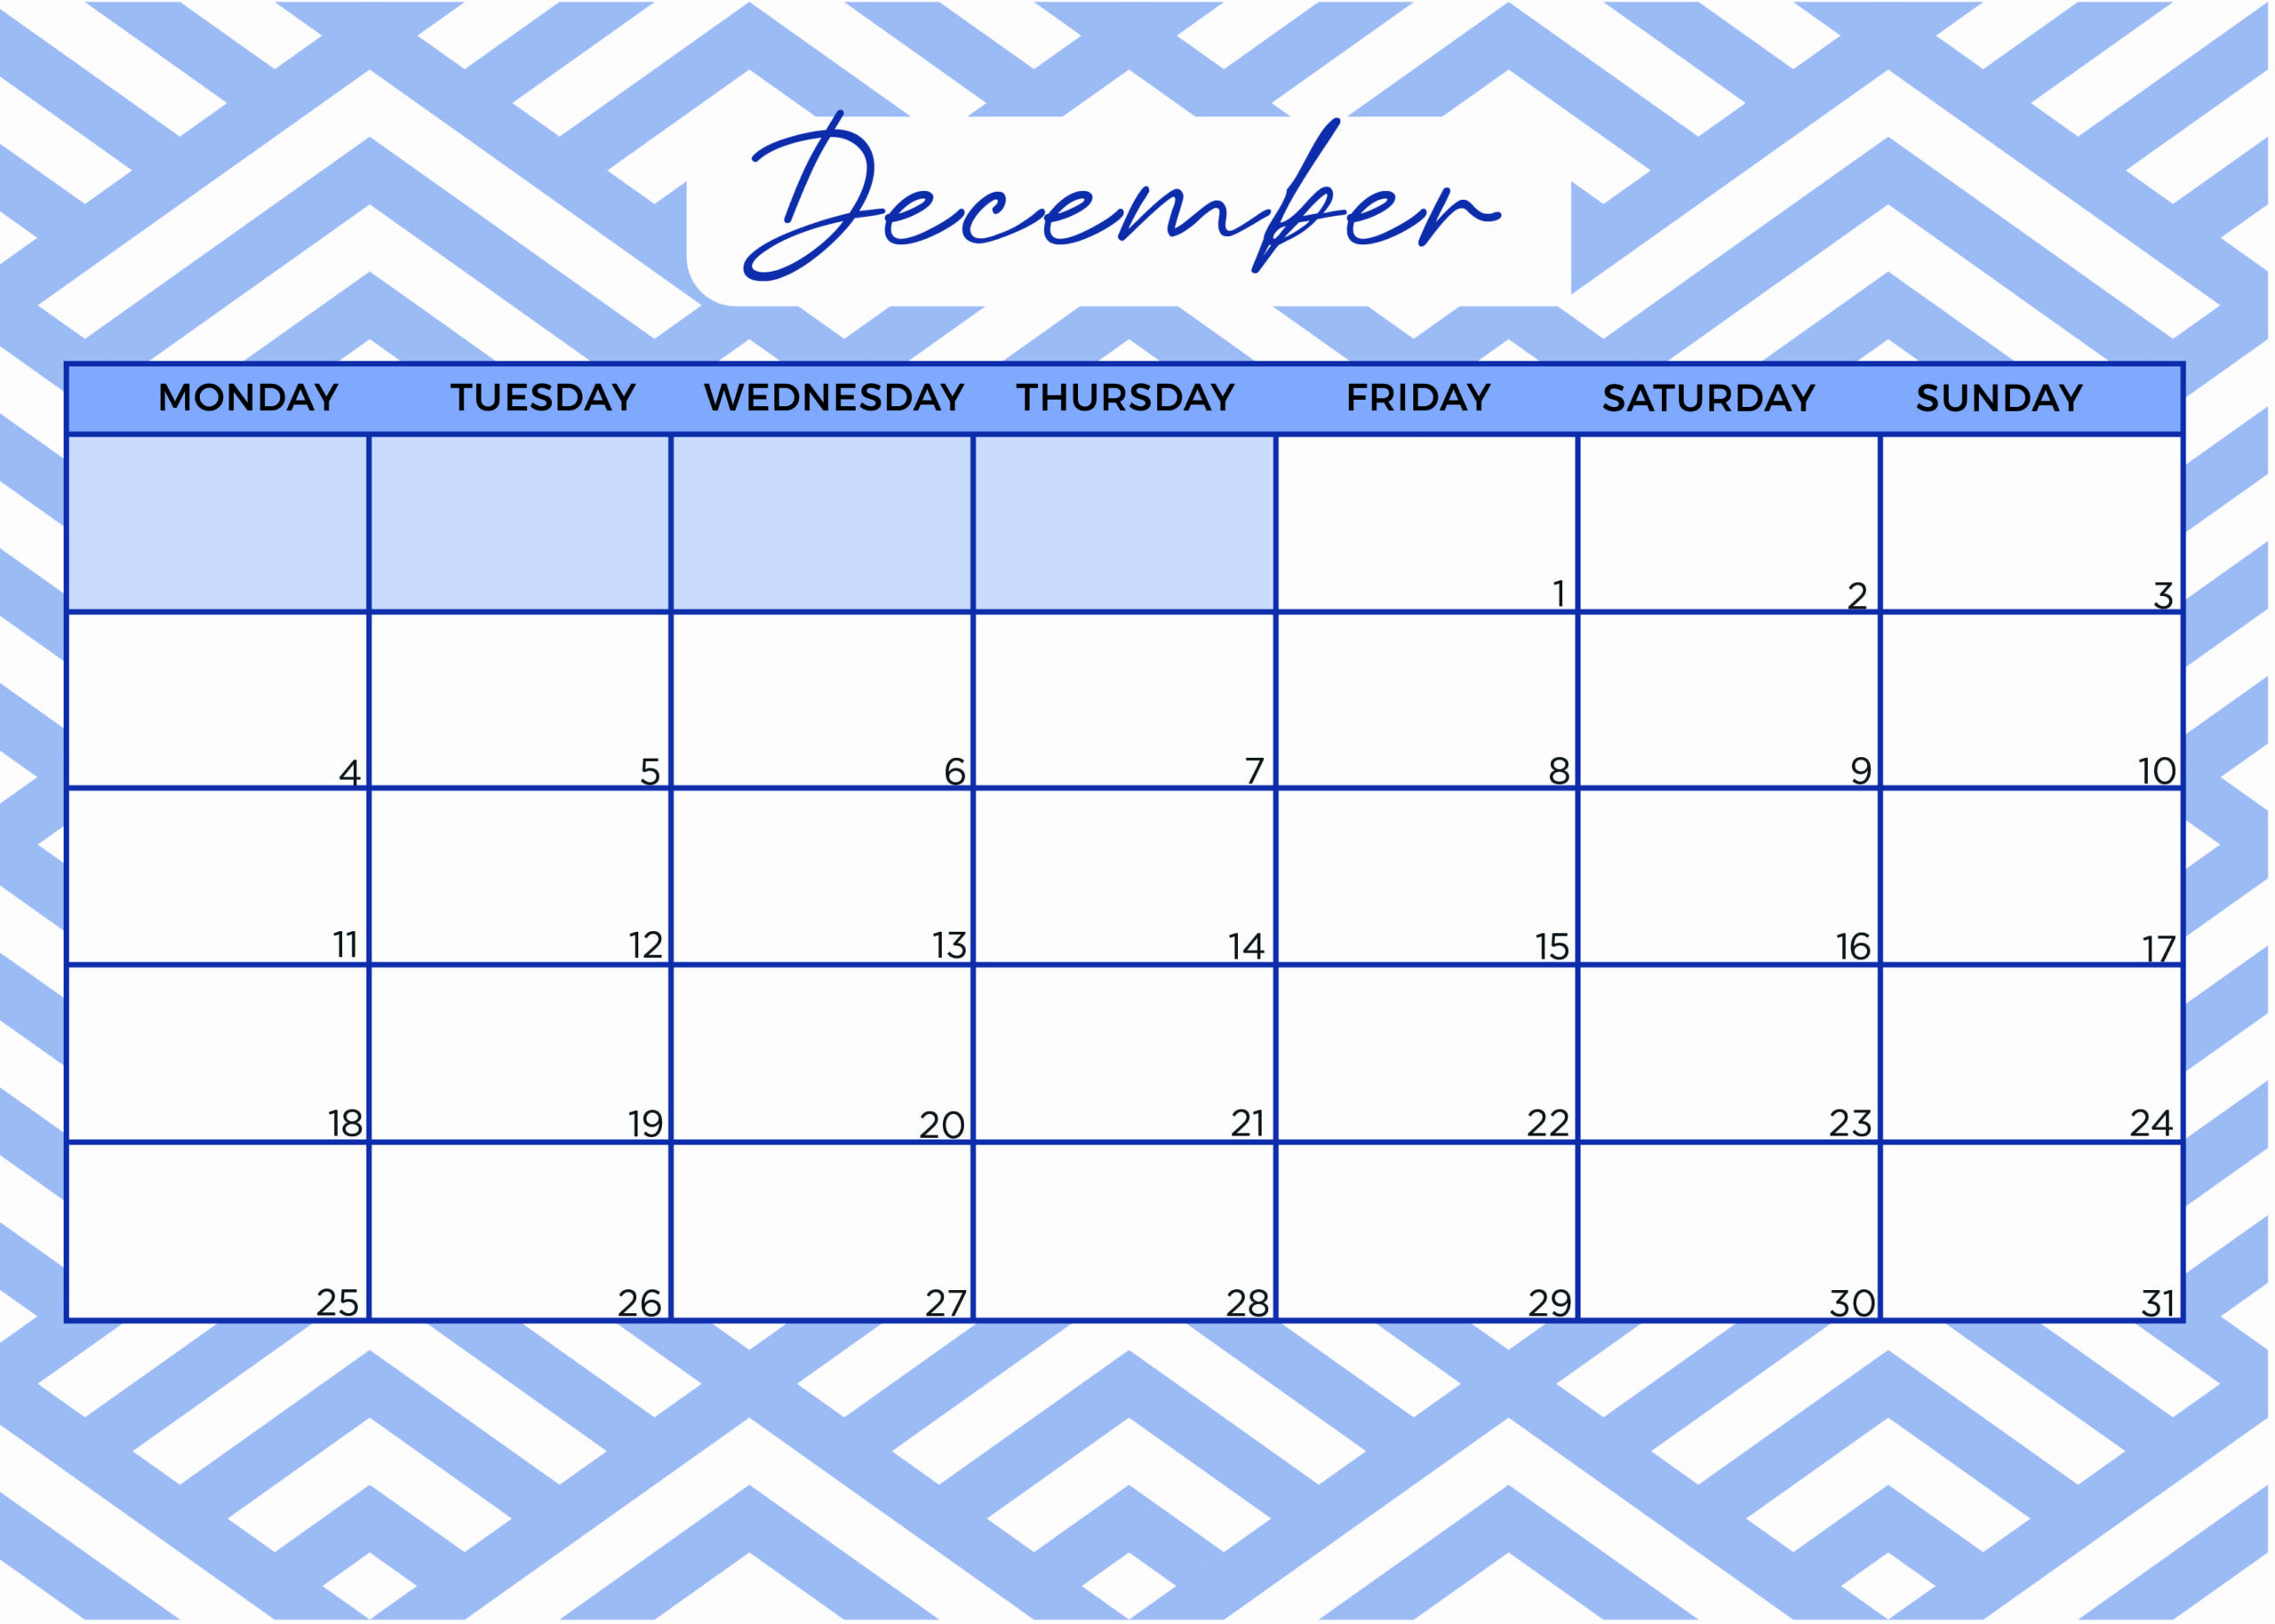 December 2023 Calendar